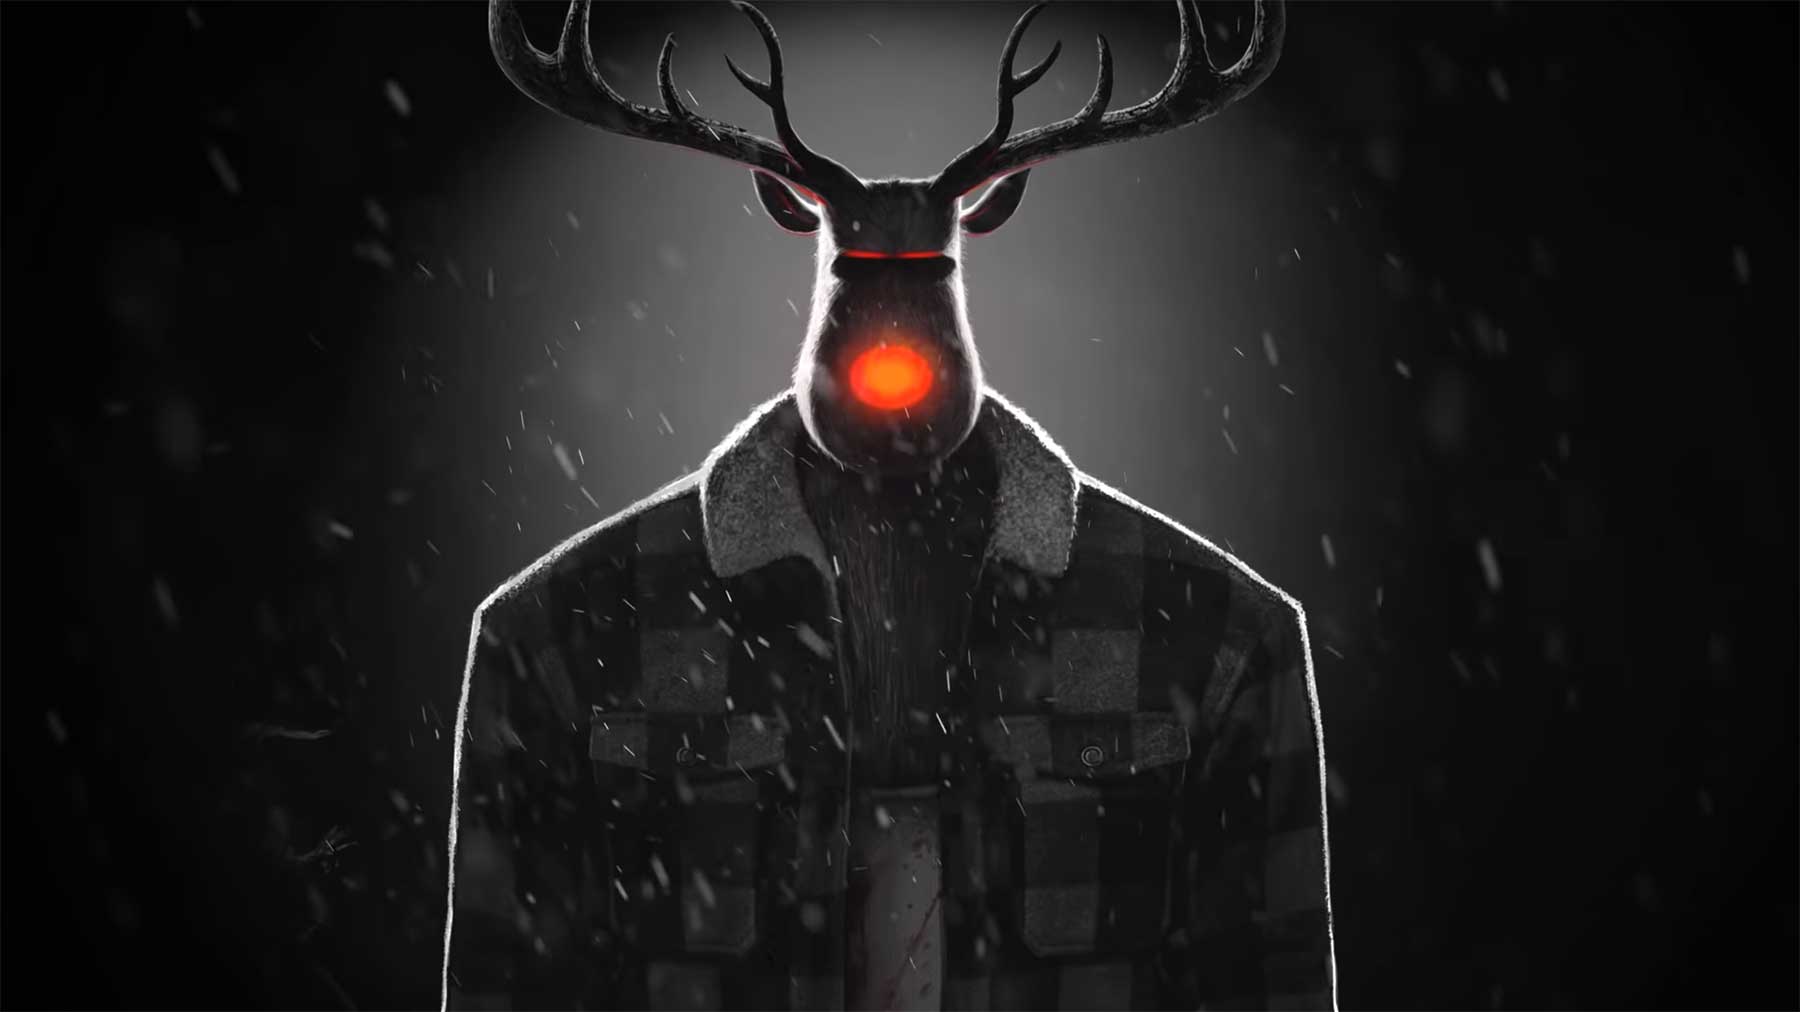 Weihnachts-Horror von Steve Cutts: „Fear Of The Deer“